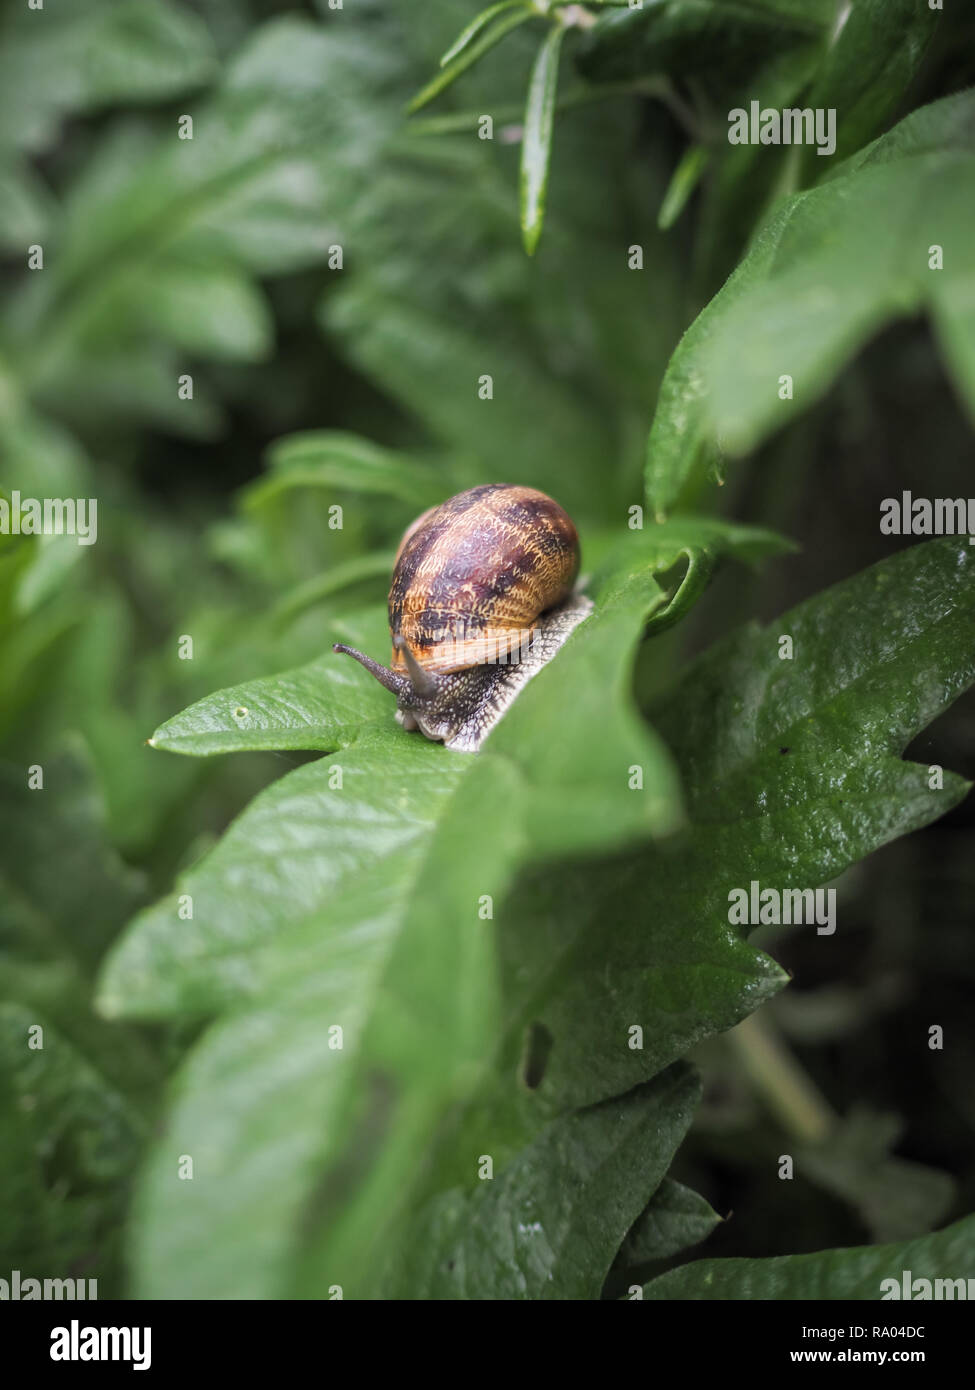 Snail crawling on a green artichoke leaf Stock Photo